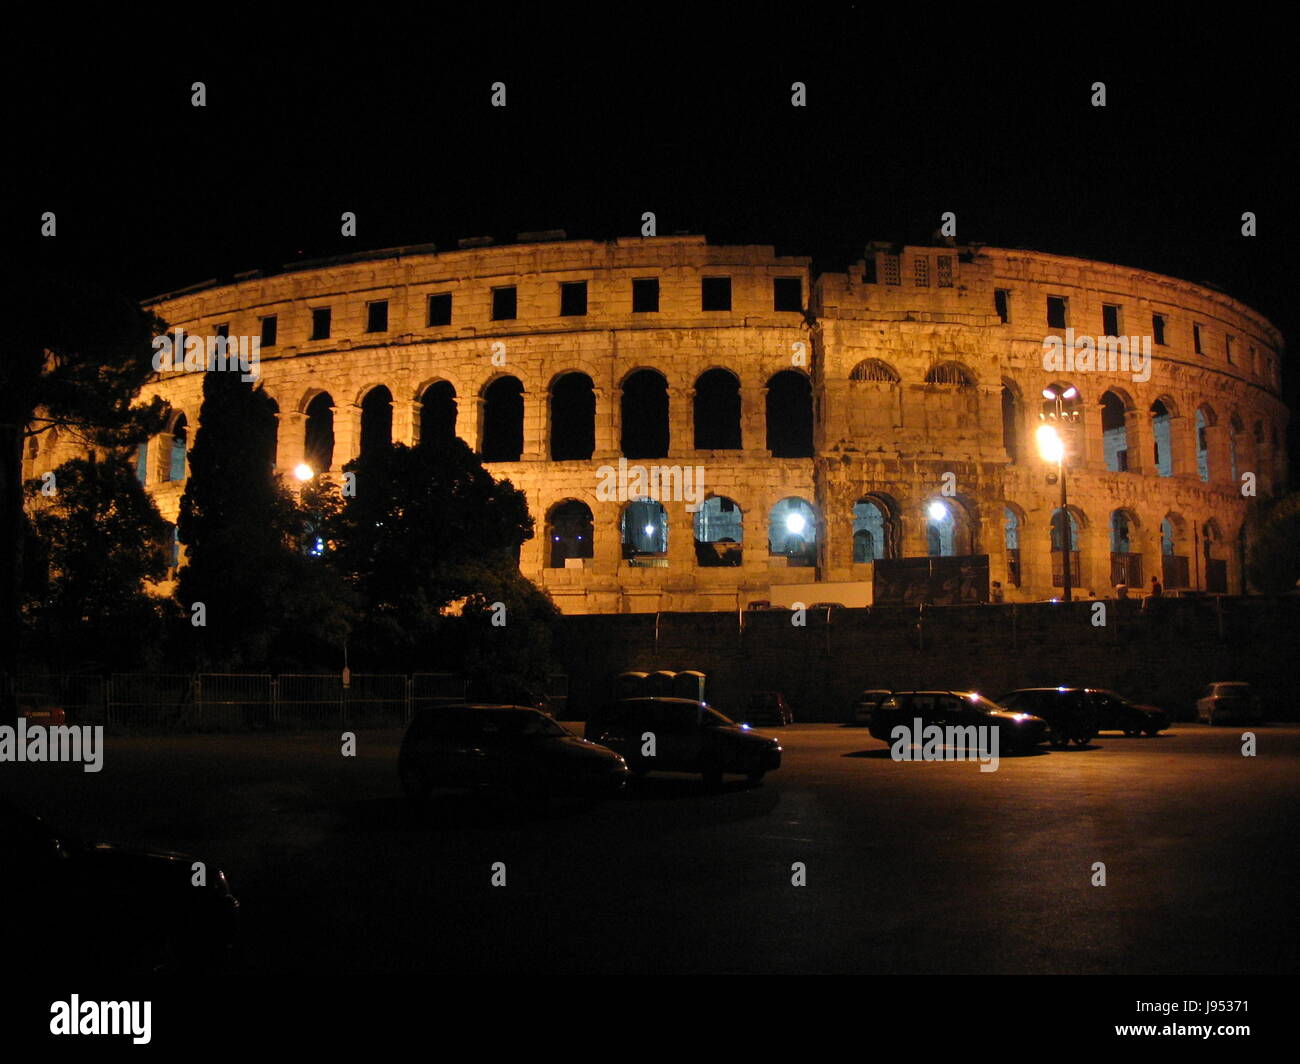 theatre, playhouse, theather, theater, adriatic sea, croatia, arena, colosseum, Stock Photo